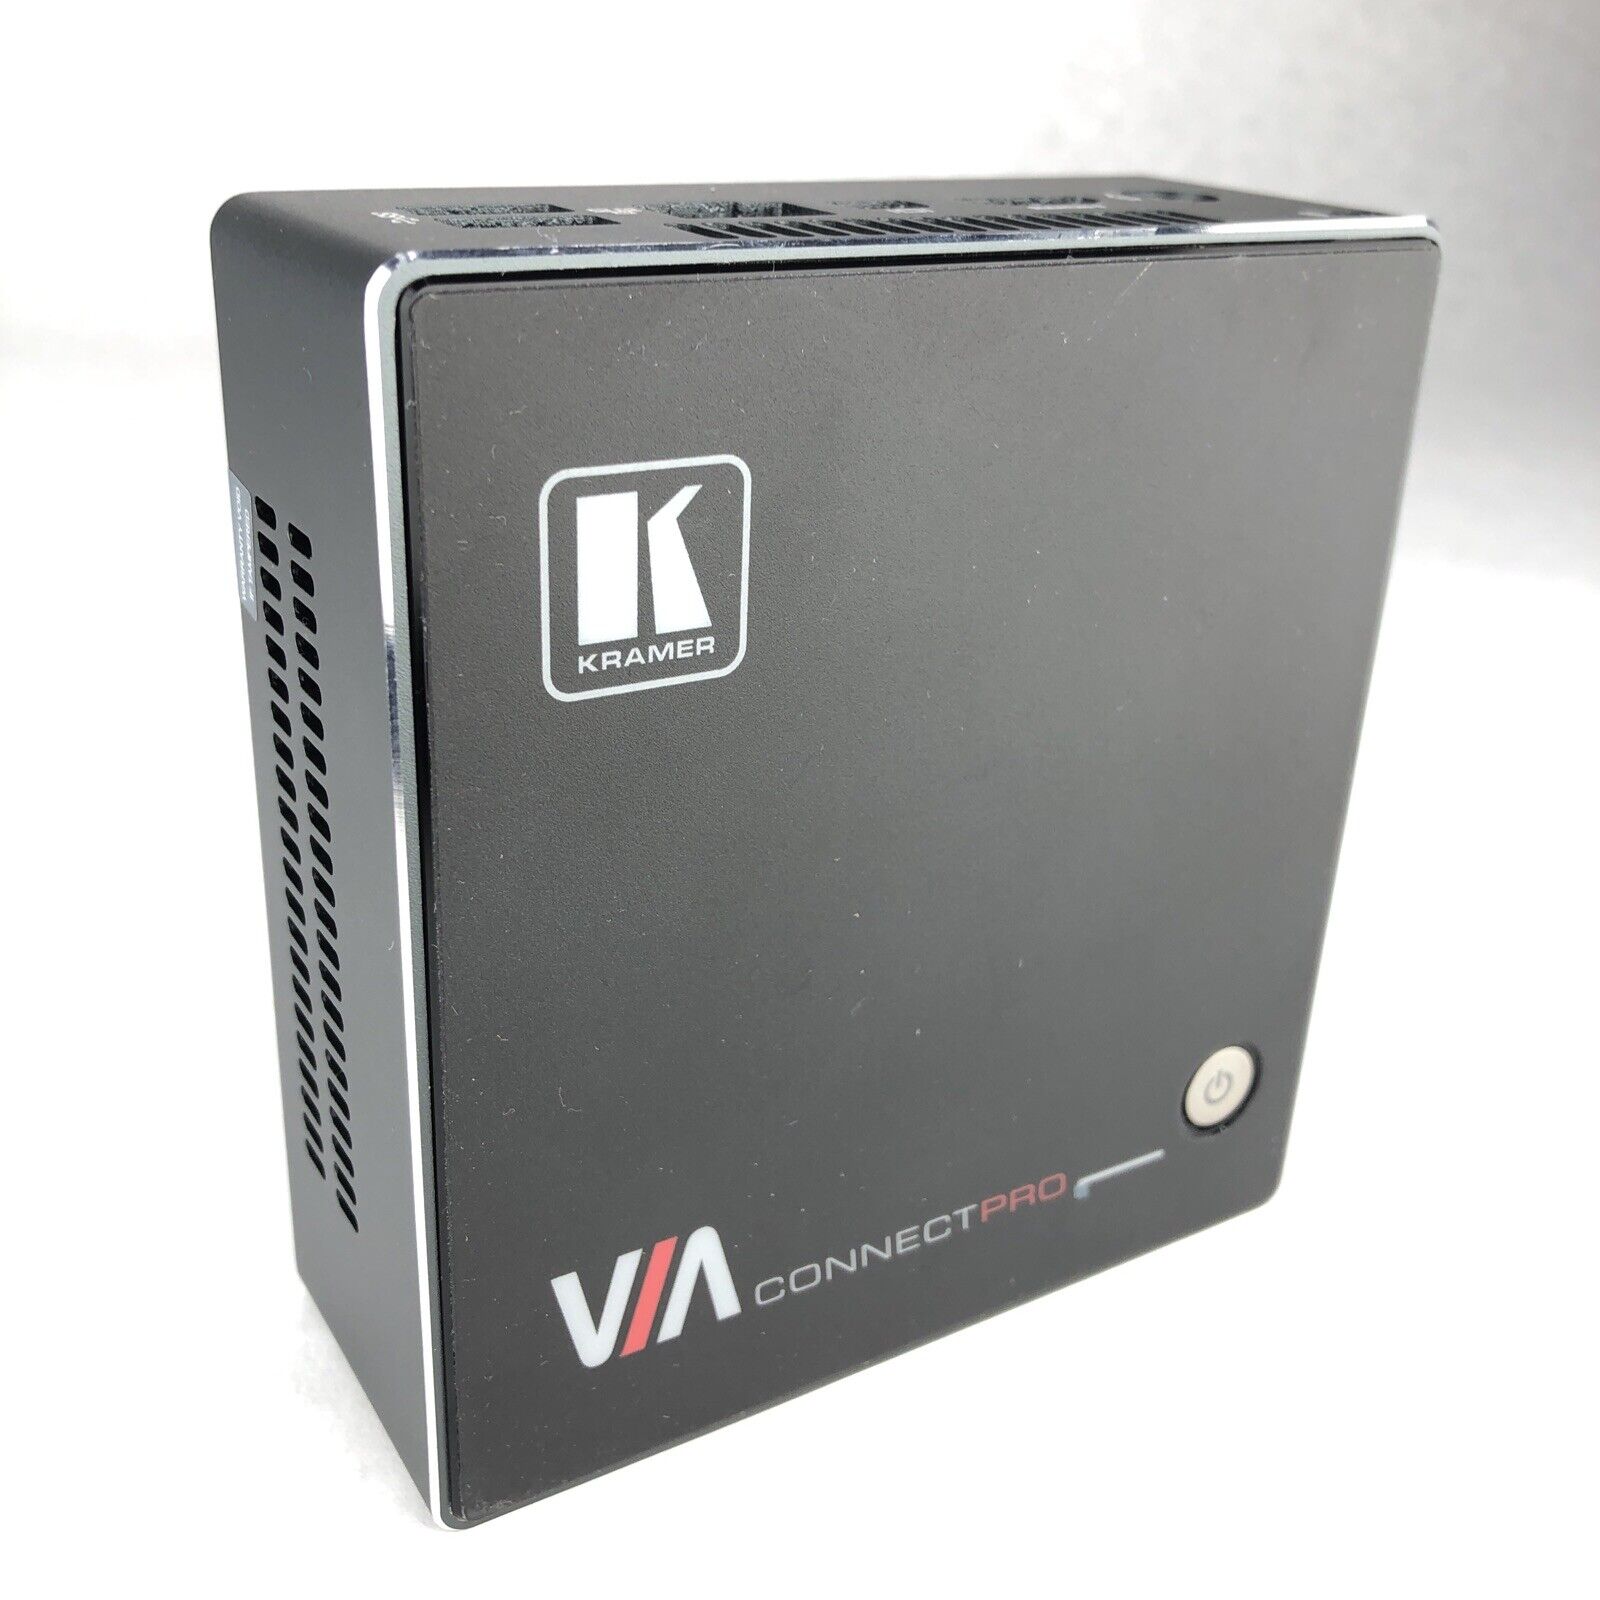 Kramer VIA Connect Hub Celeron 2955V 1.4GHz 4GB RAM No SSD No WiFi Card LOT OF 3